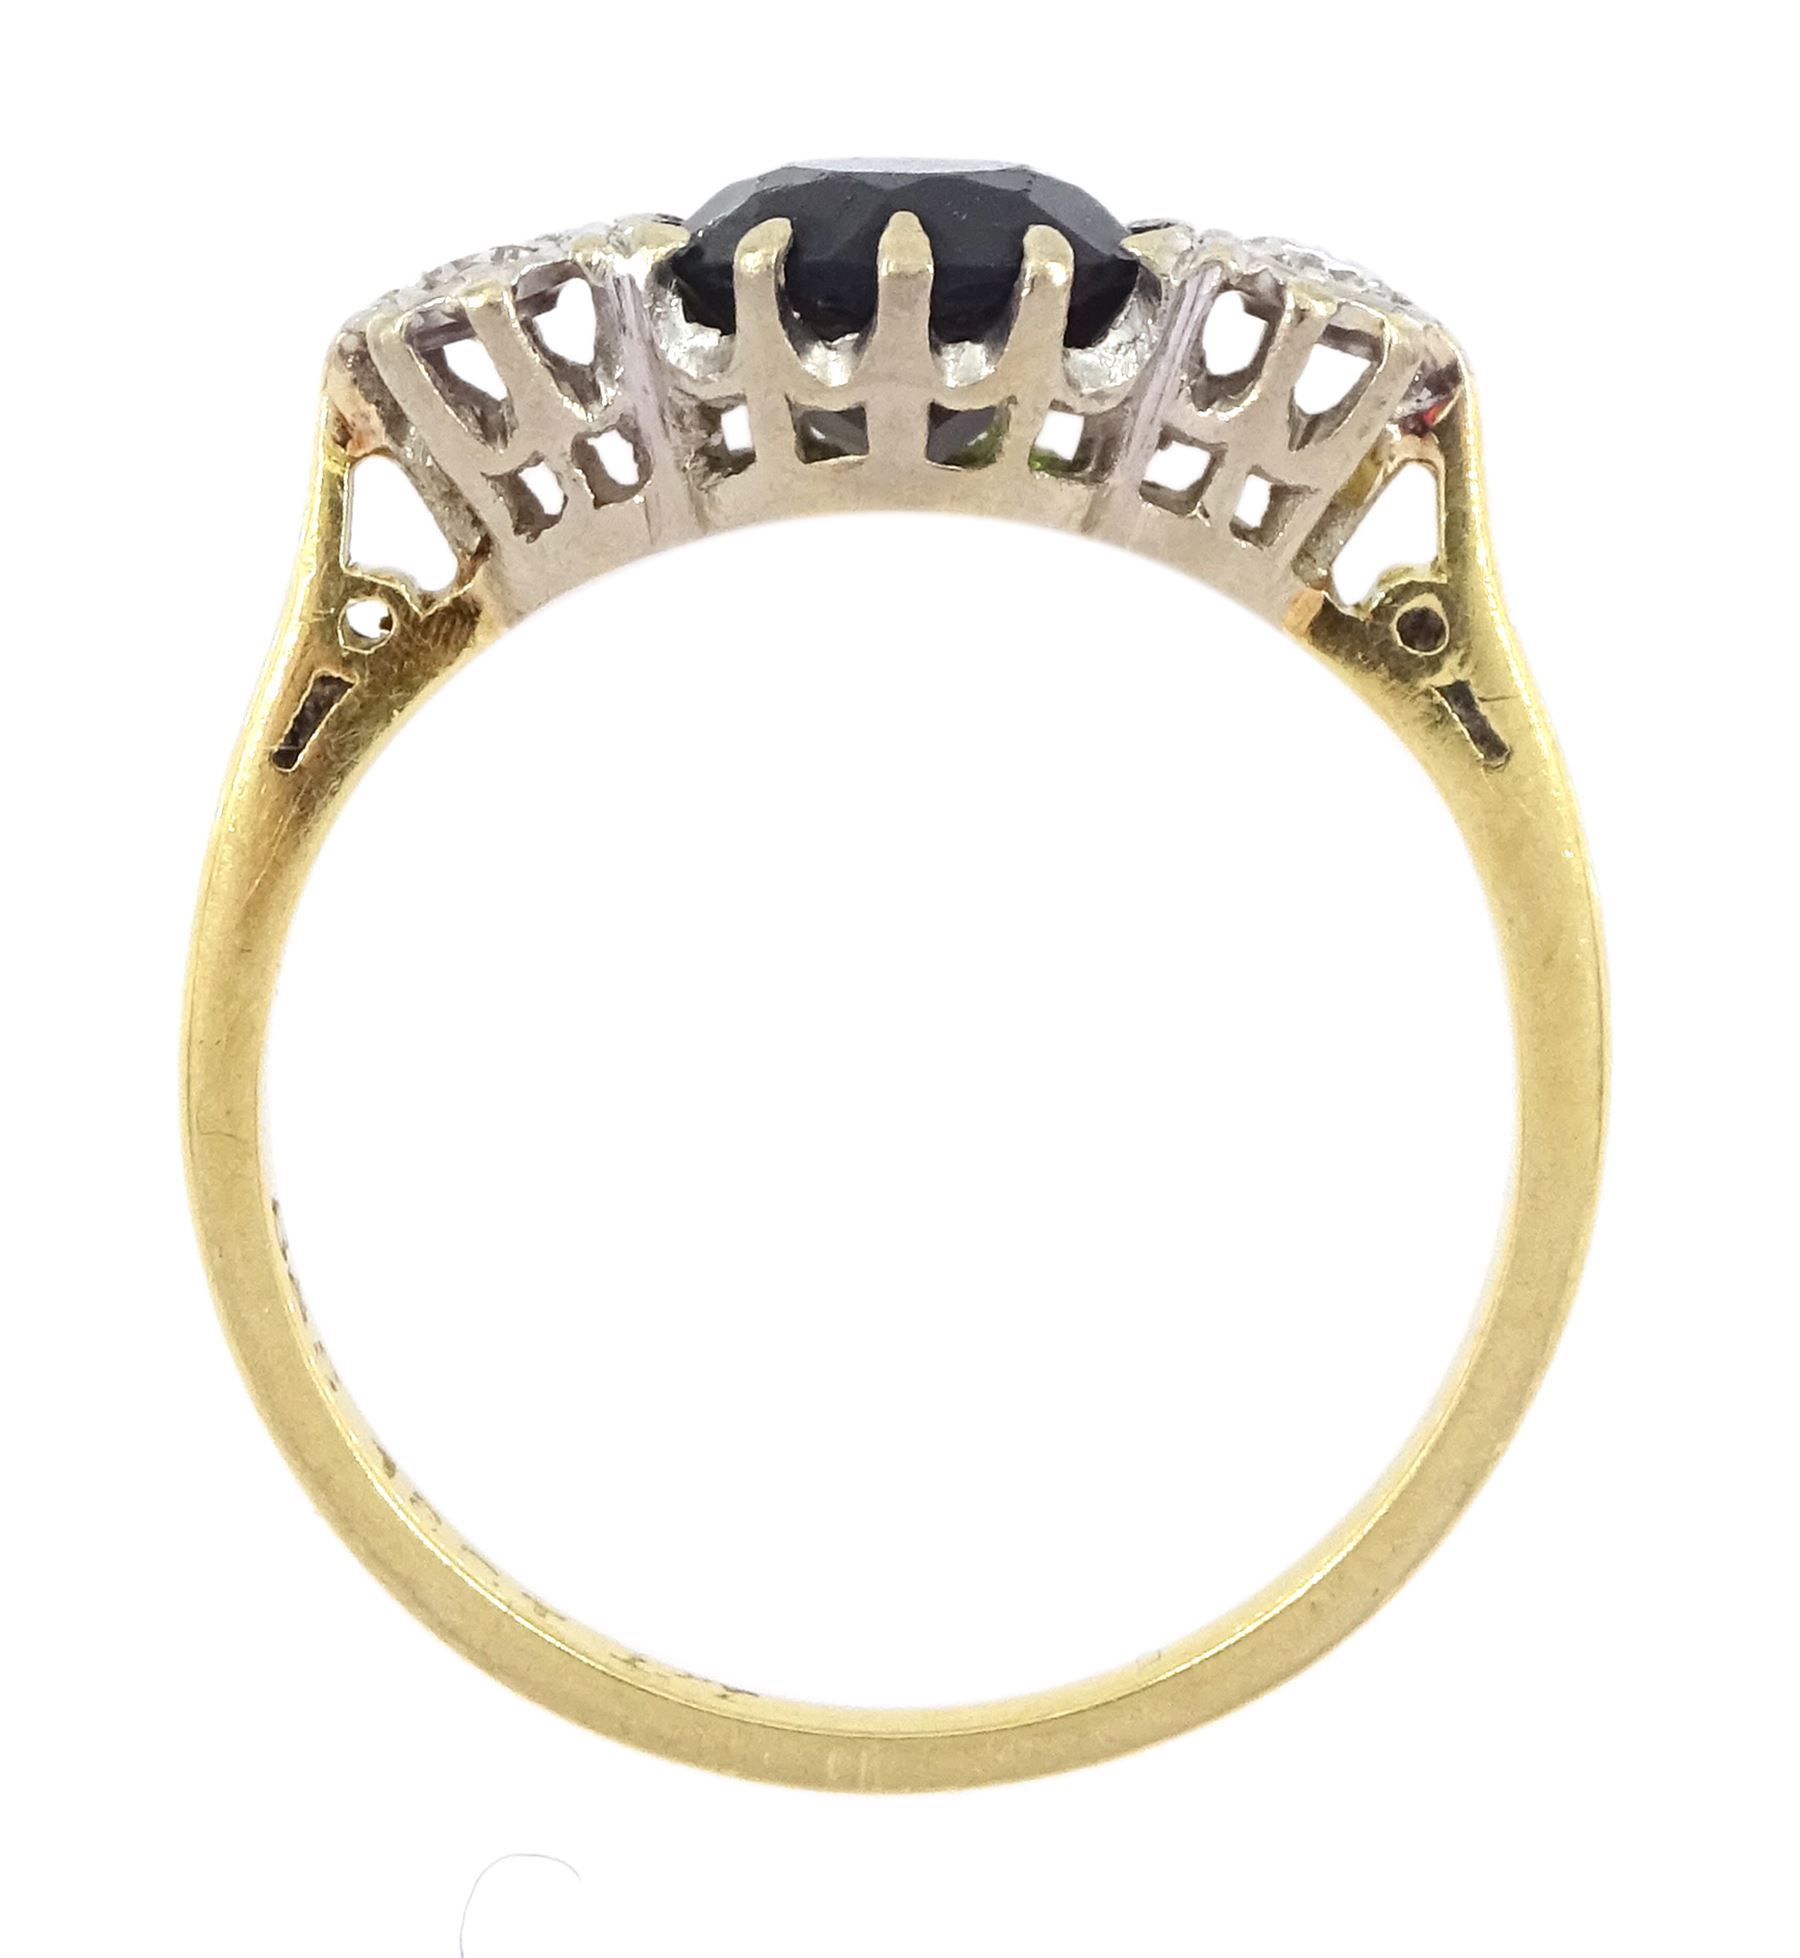 18ct gold three stone tourmaline and round brilliant cut diamond ring - Image 4 of 4